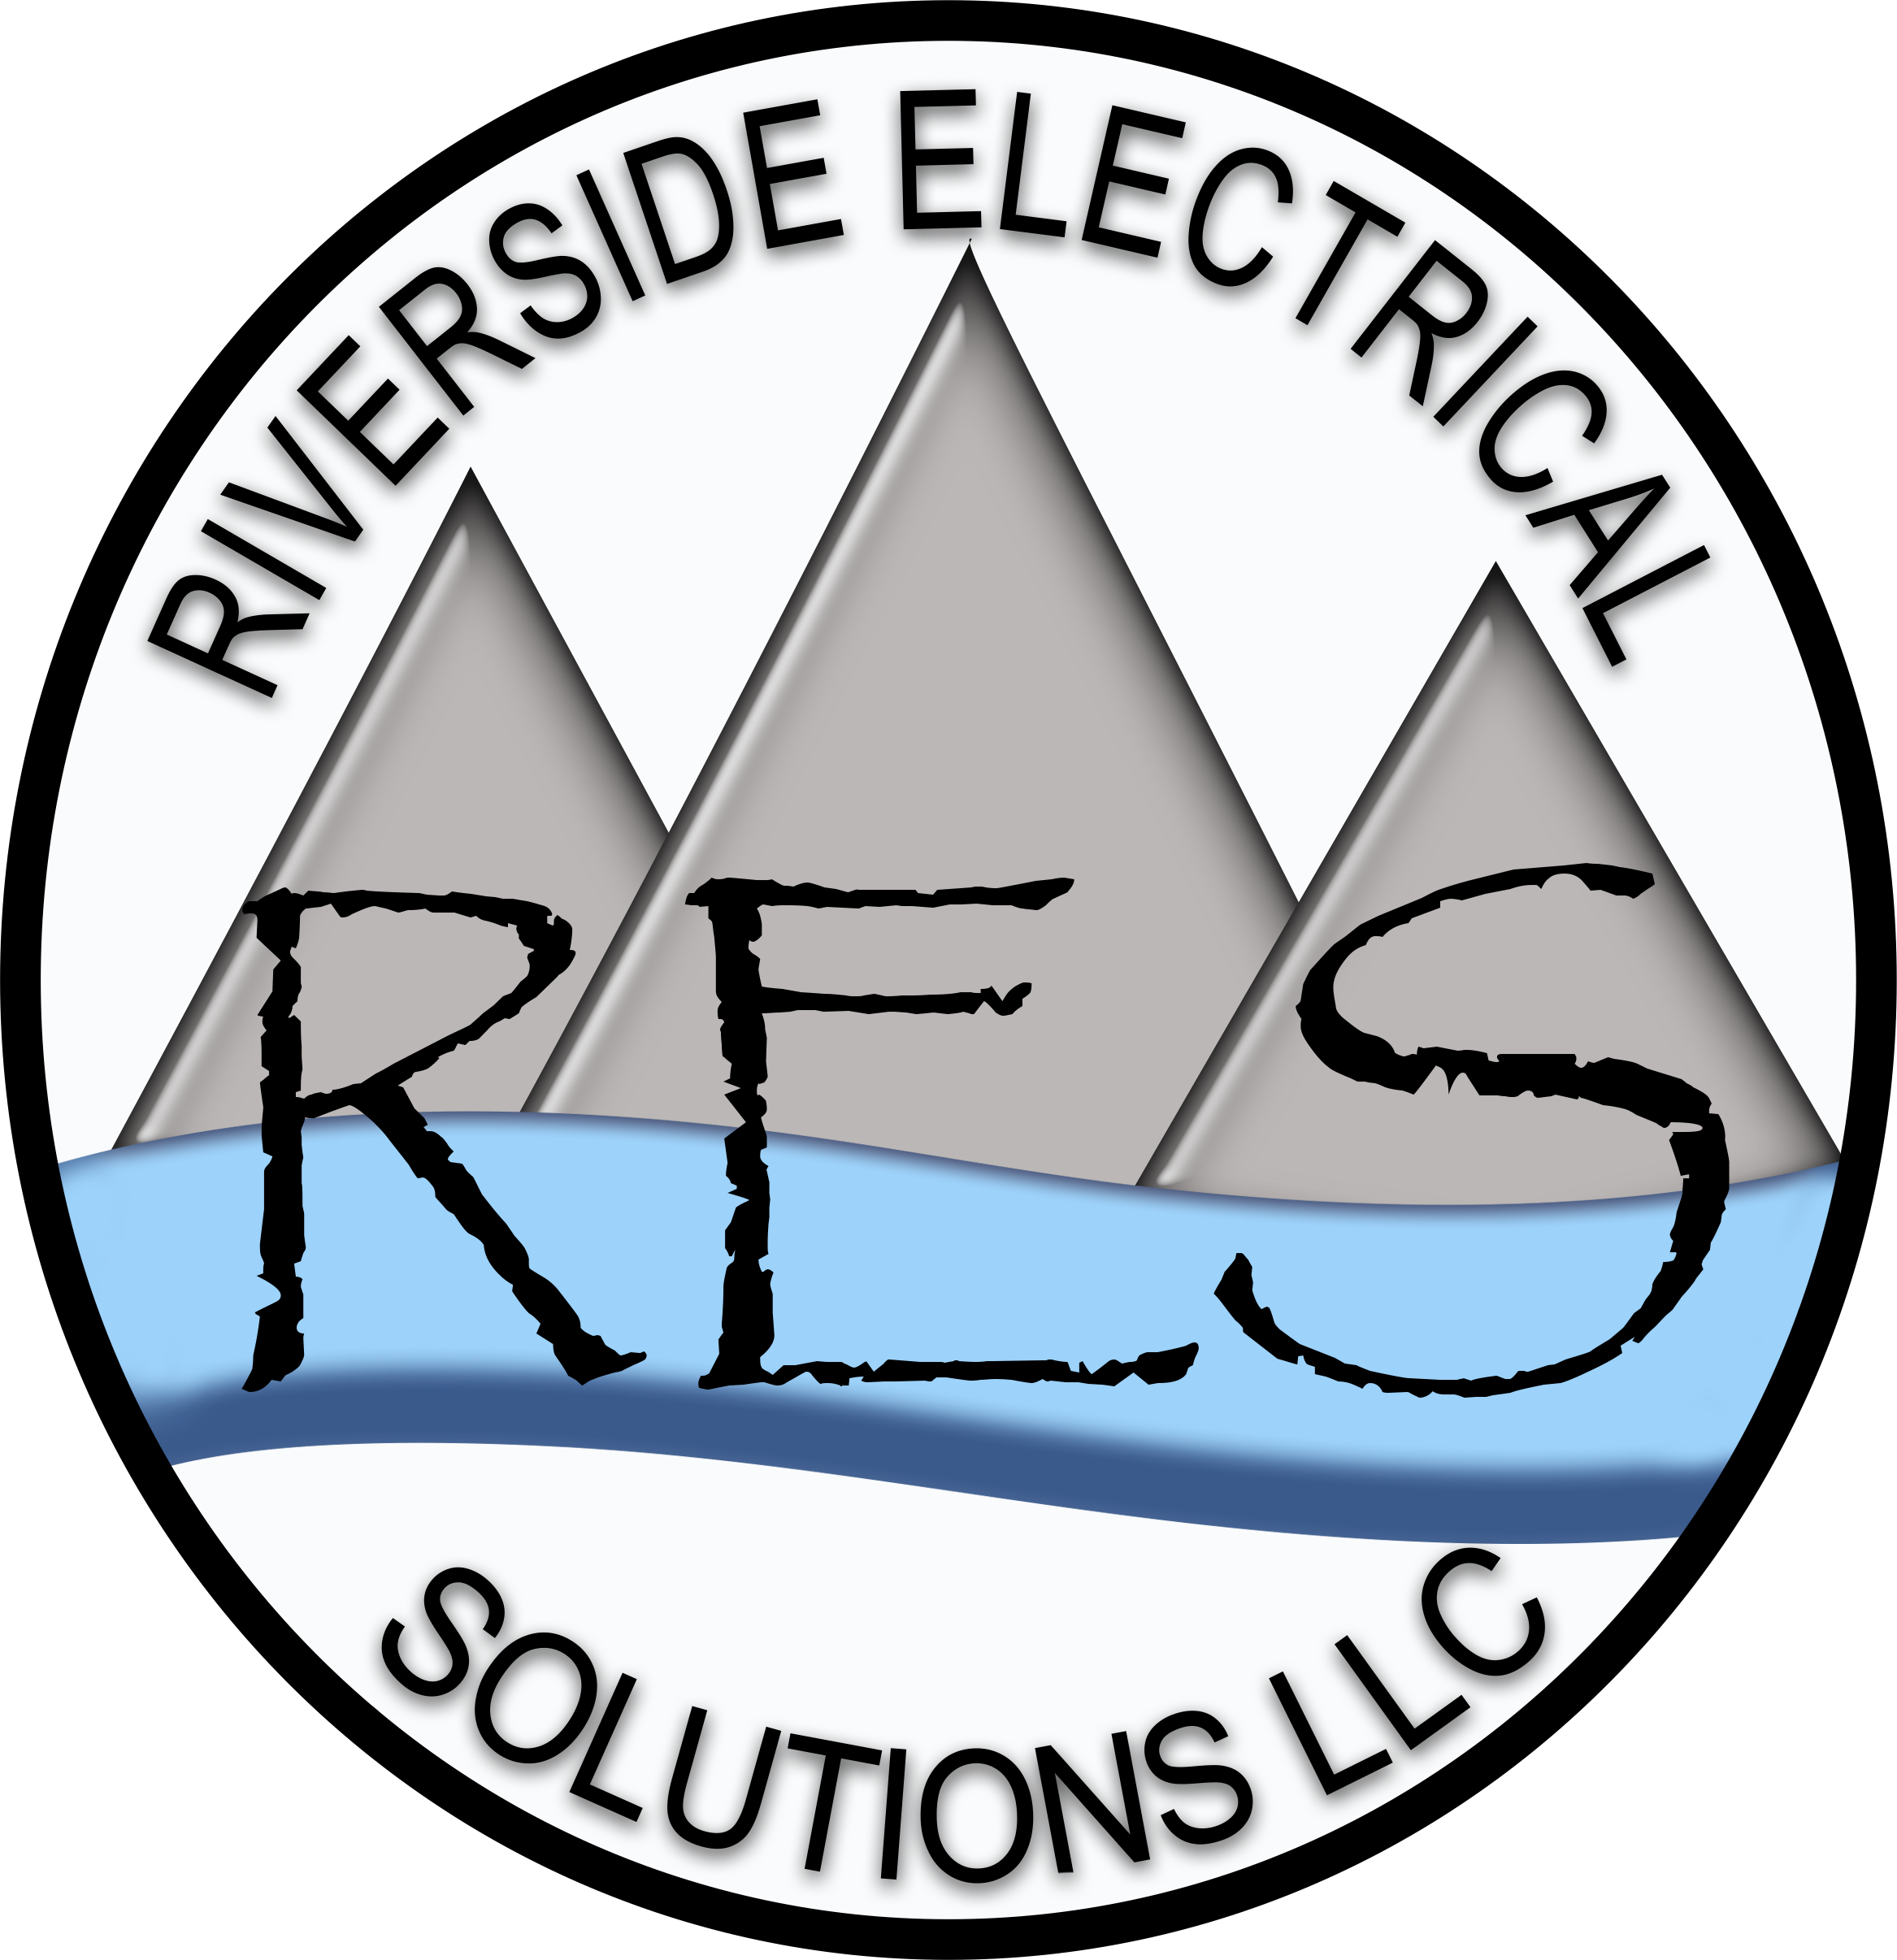 Riverside Electrical Solutions LLC